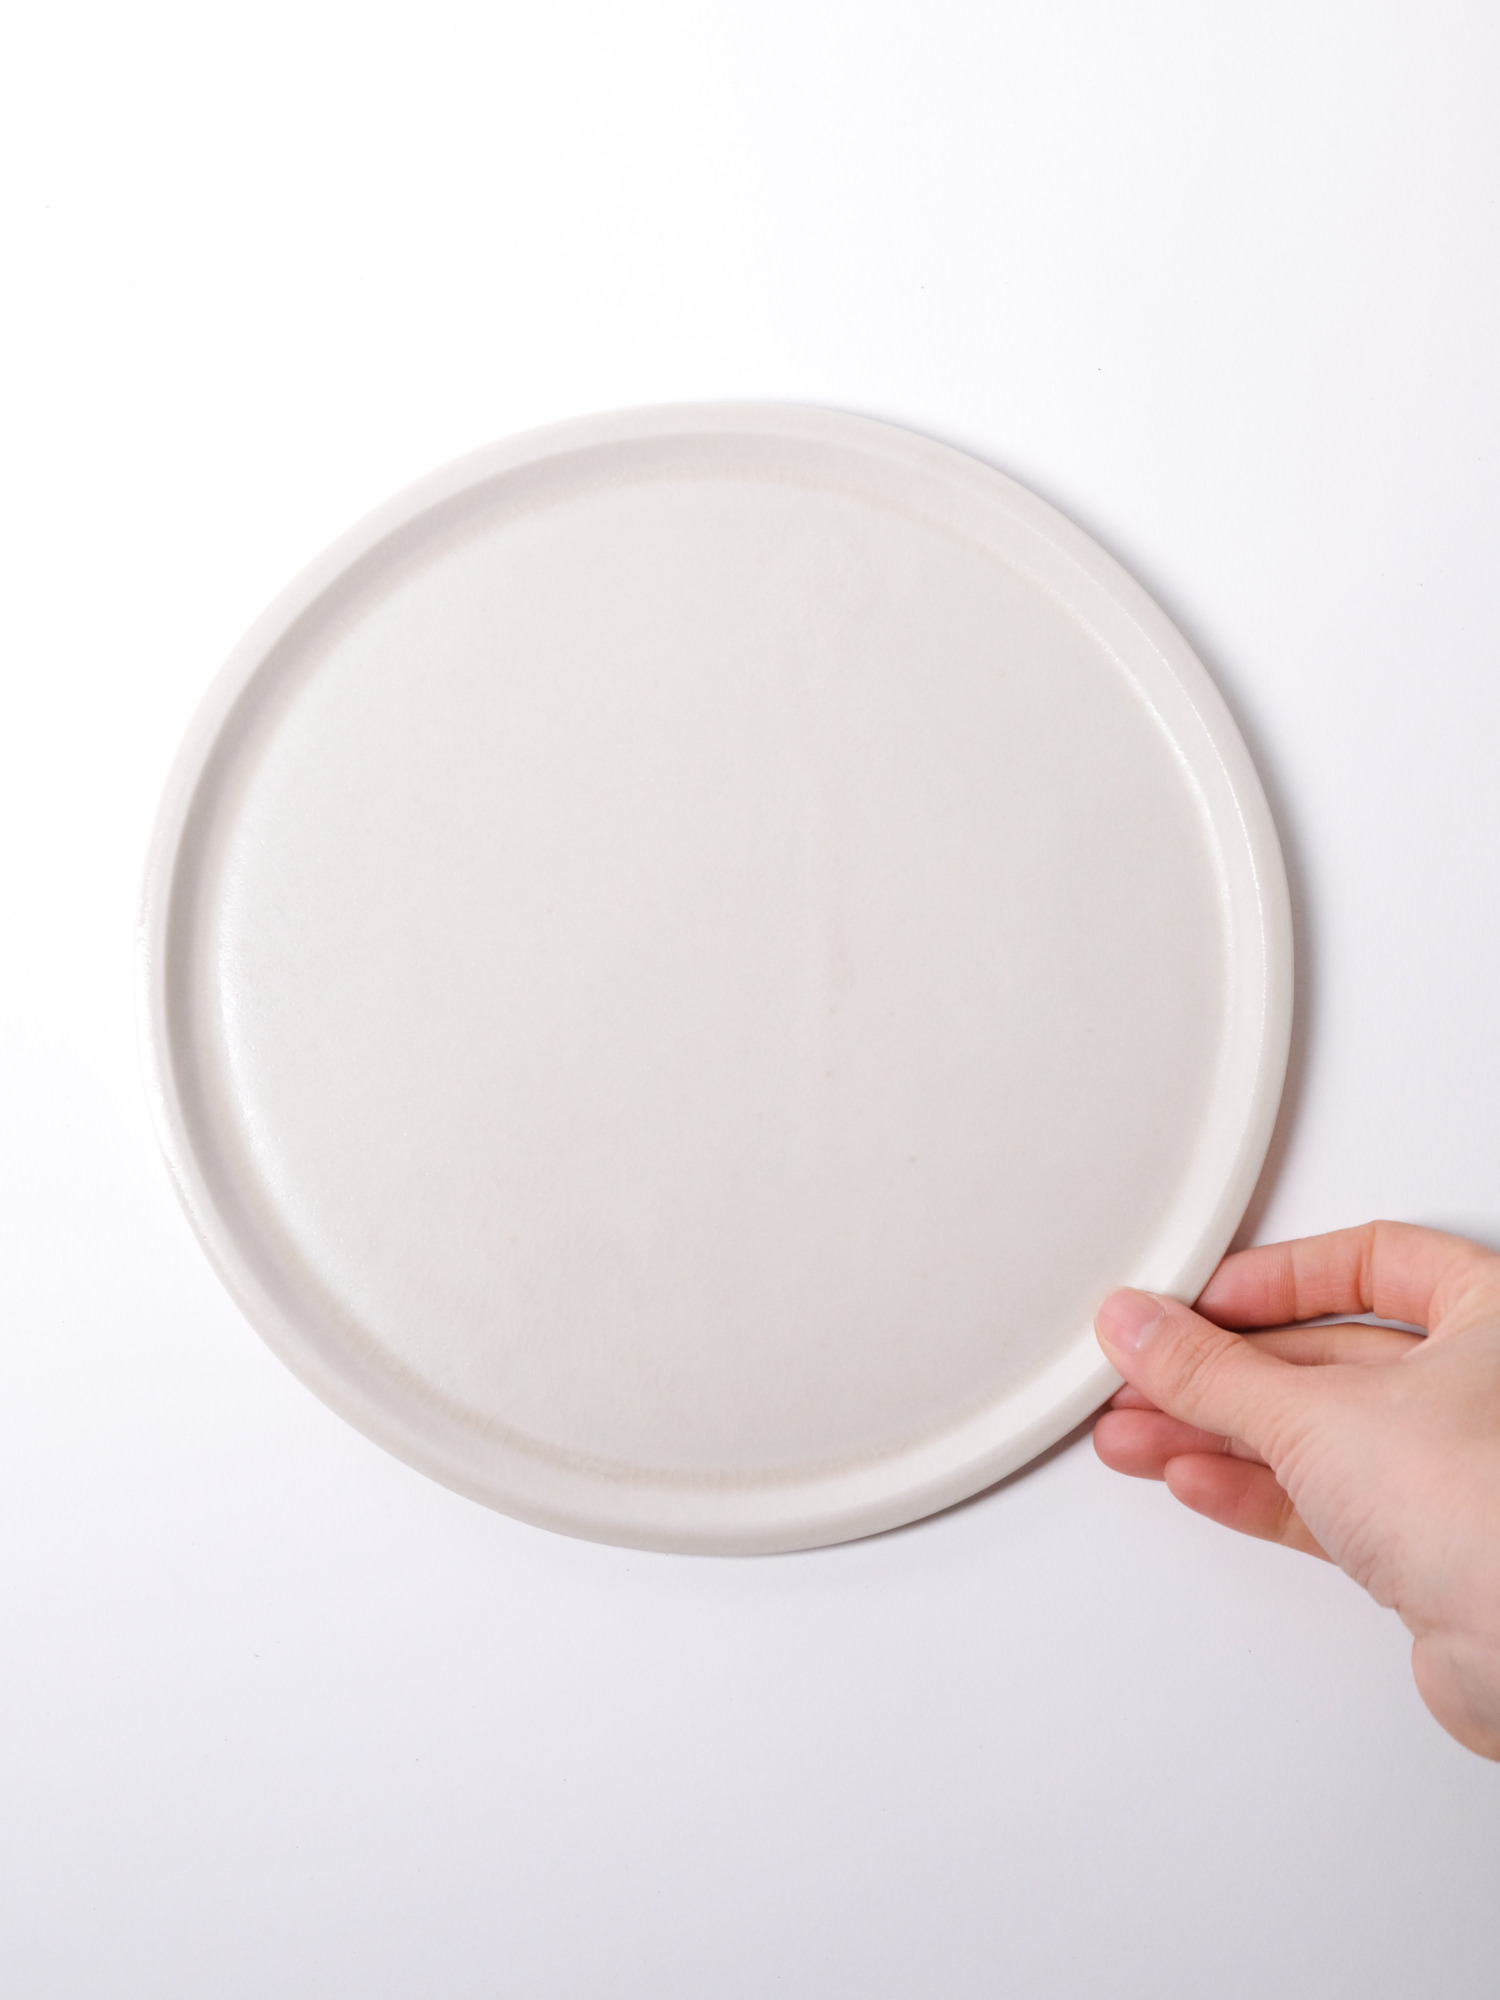 basic plate 23cm